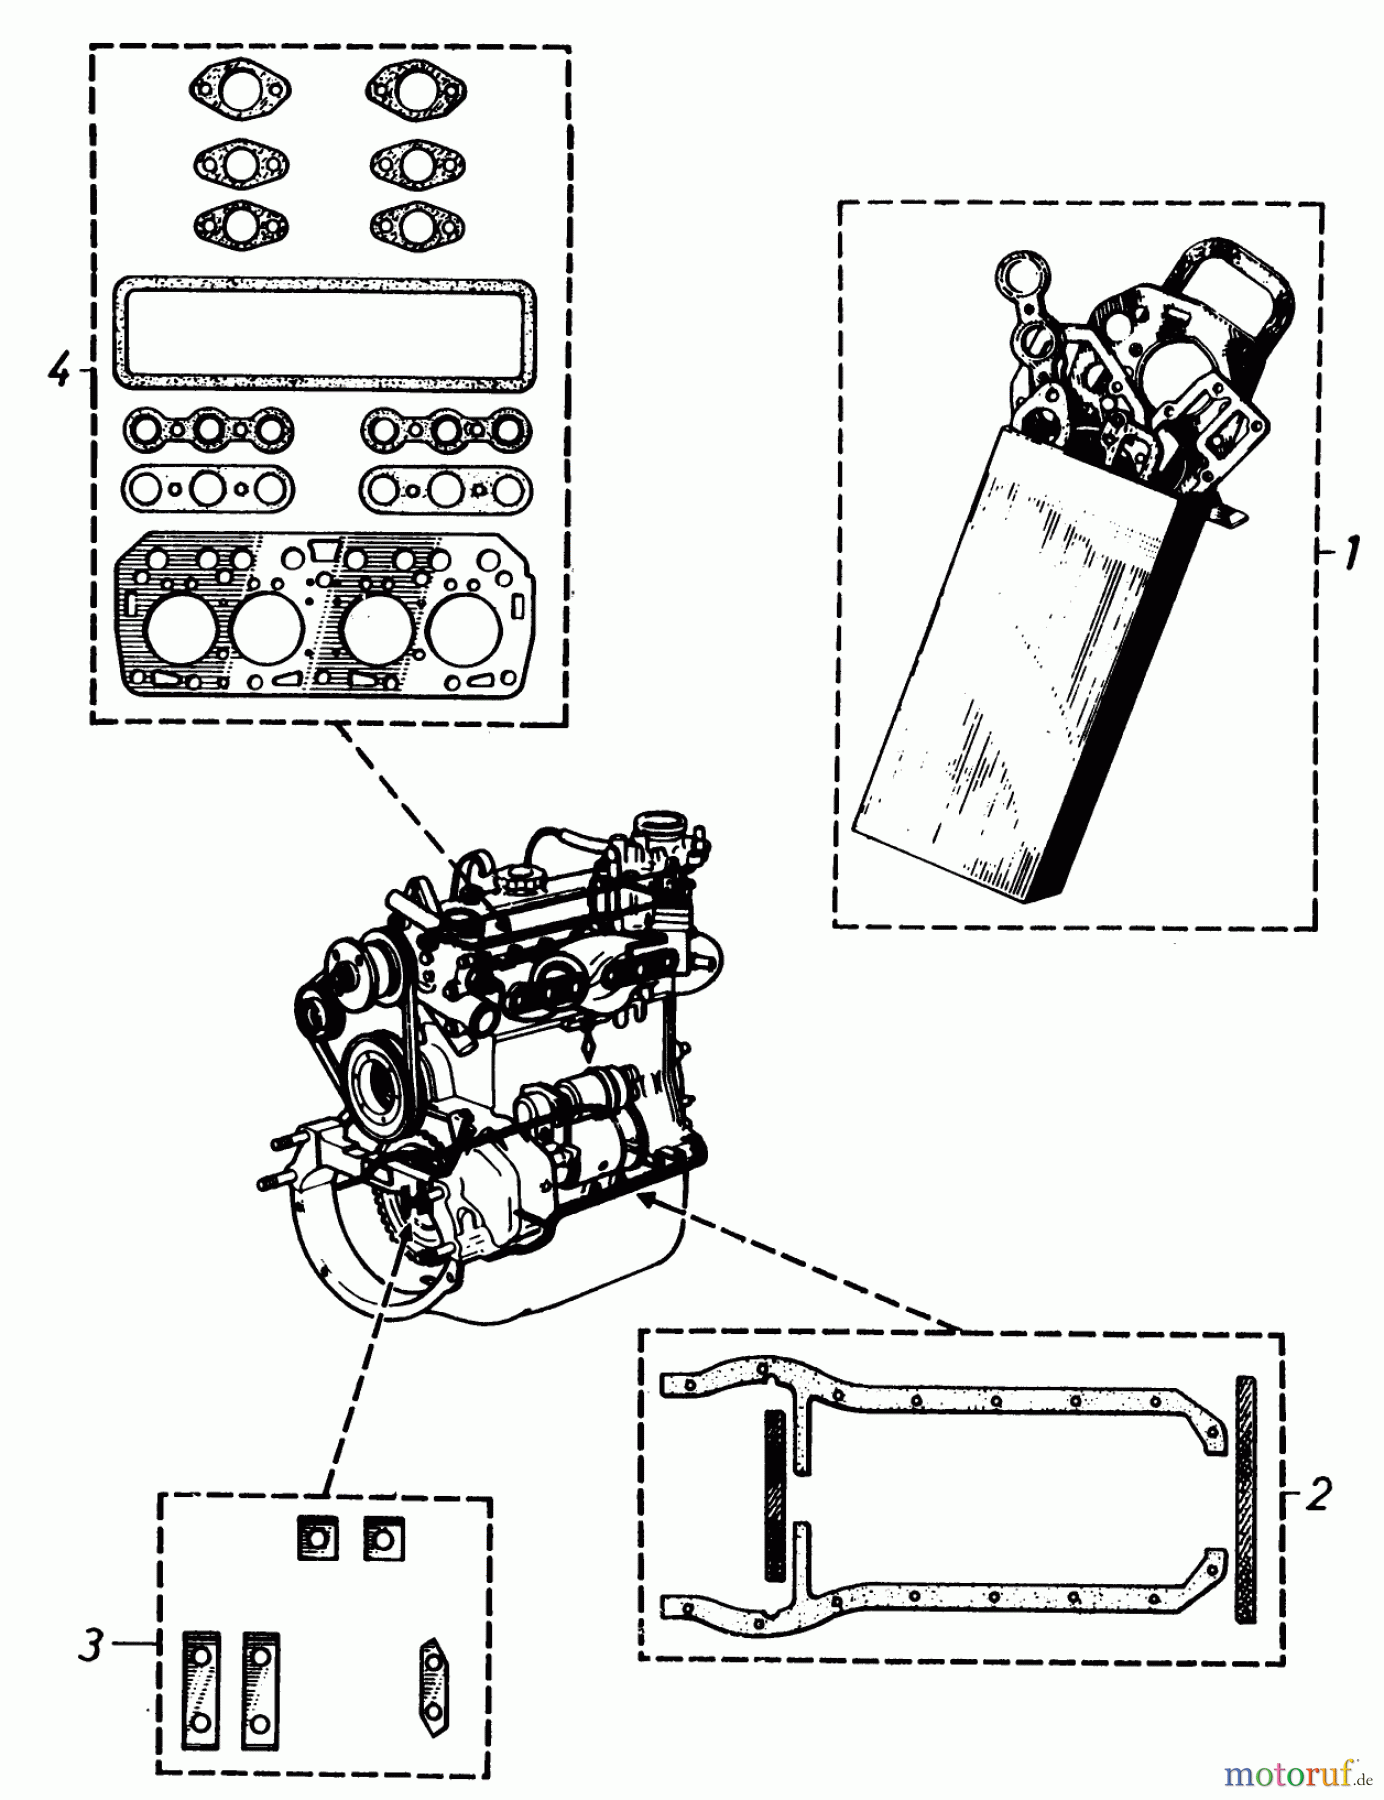  Toro Neu Mowers, Lawn & Garden Tractor Seite 2 91-20RG01 (D-250) - Toro D-250 10-Speed Tractor, 1981 GASKET SETS